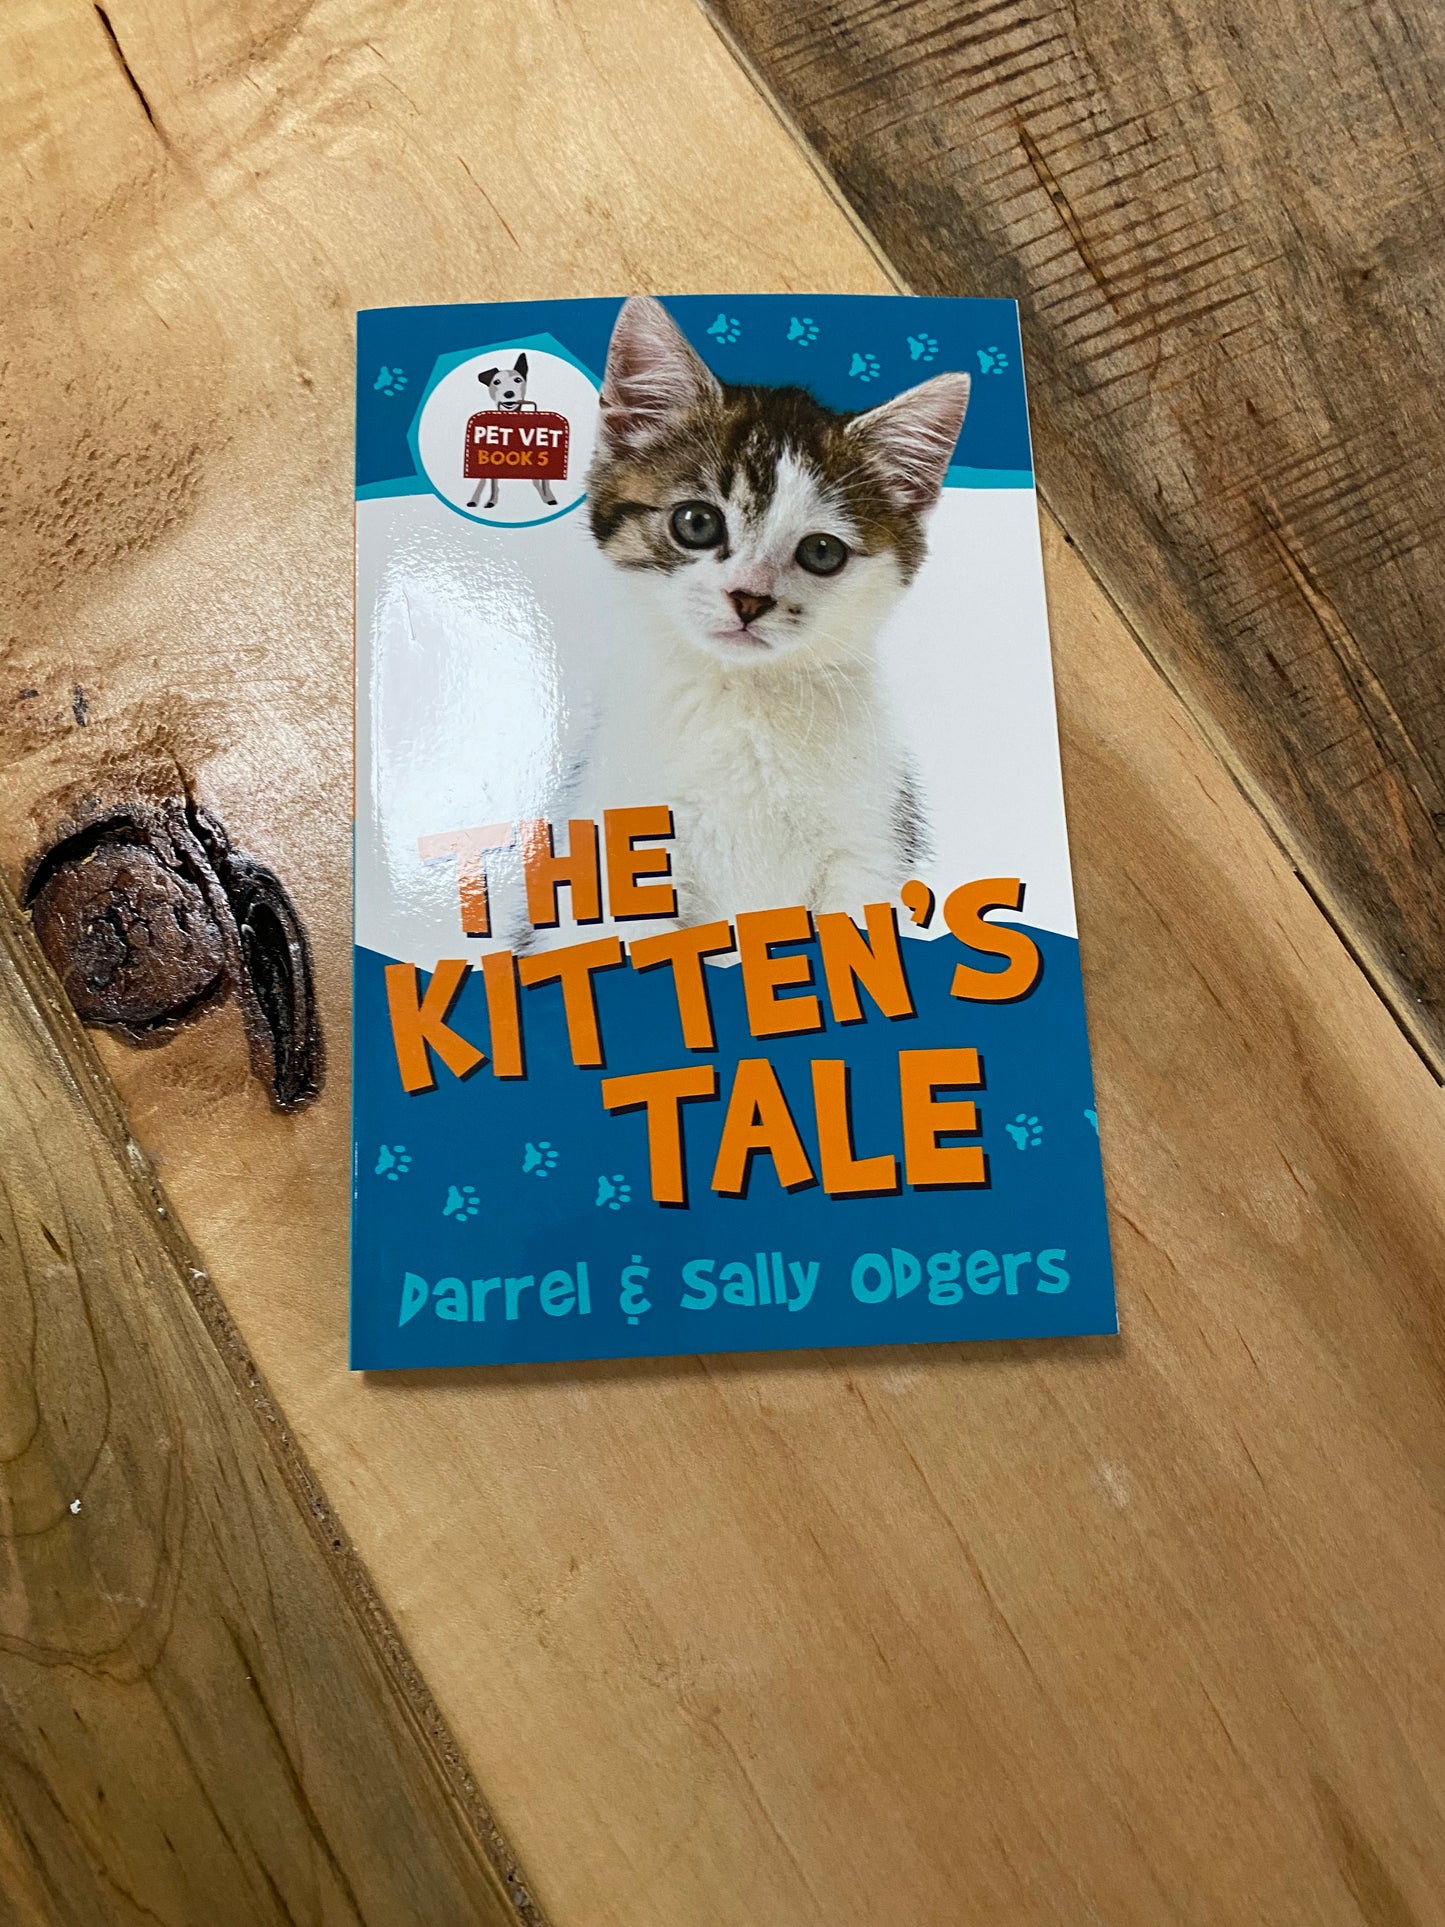 The kittens tale